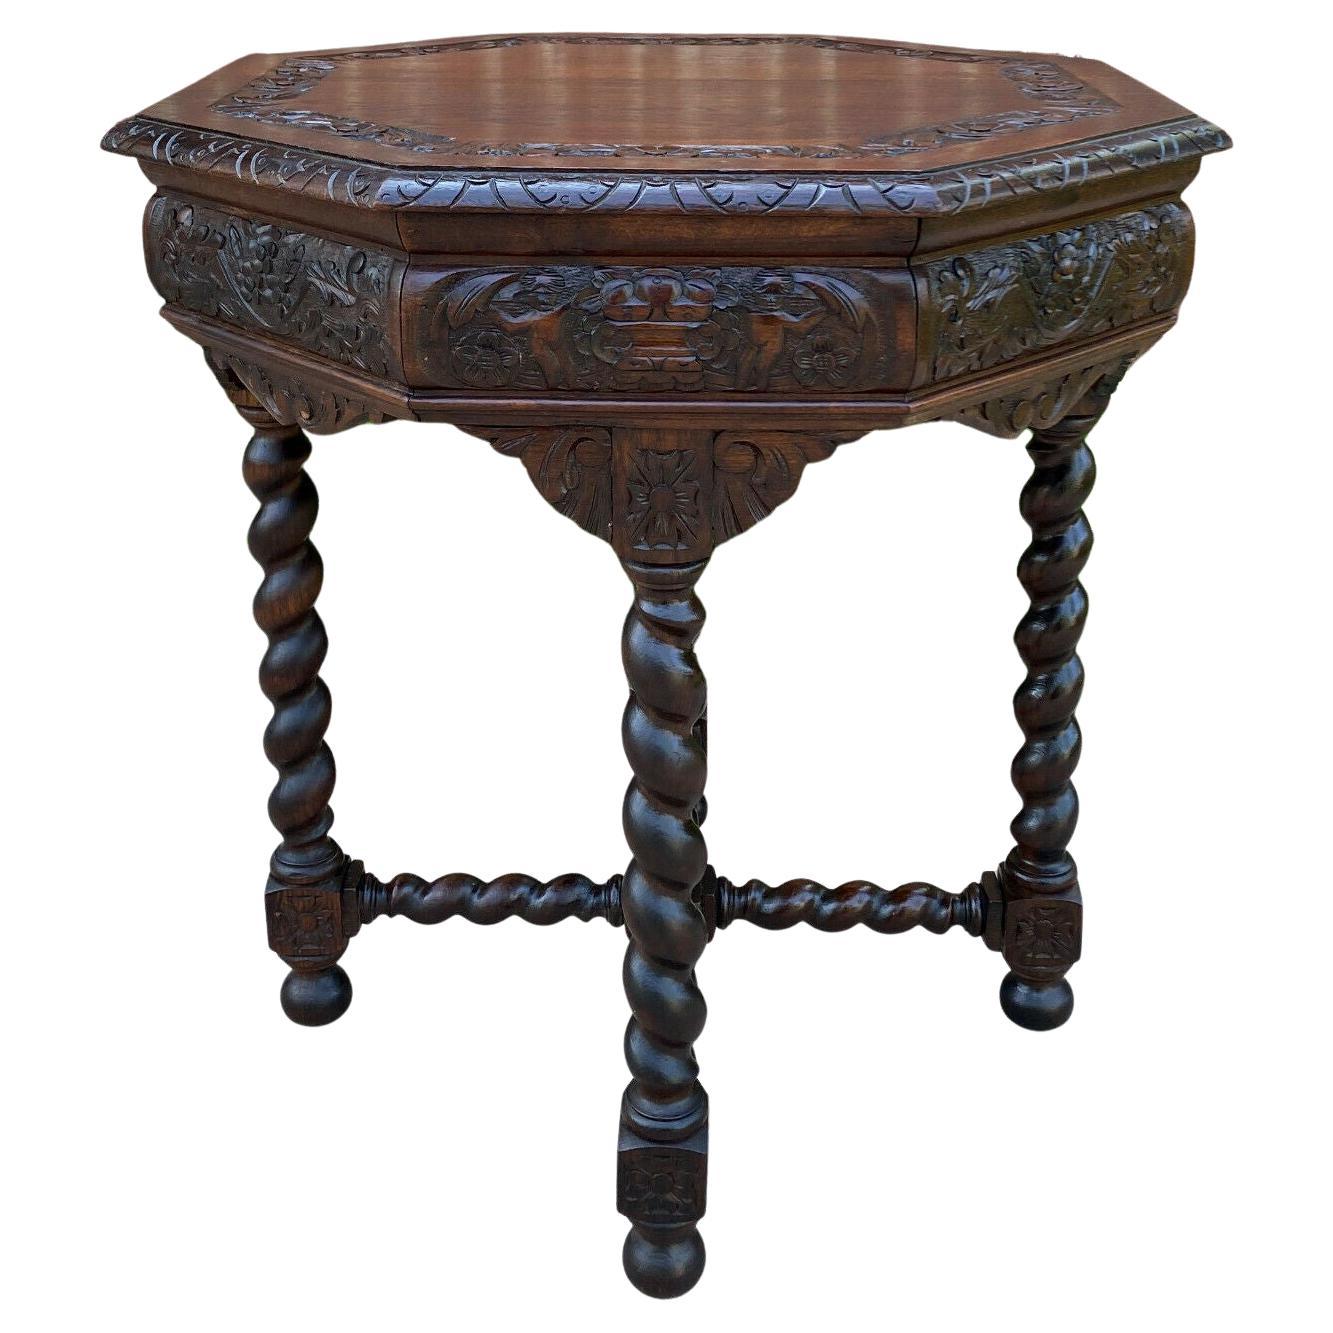 Antique French Table Barley Twist Octagonal Renaissance Revival Carved Oak 19thC